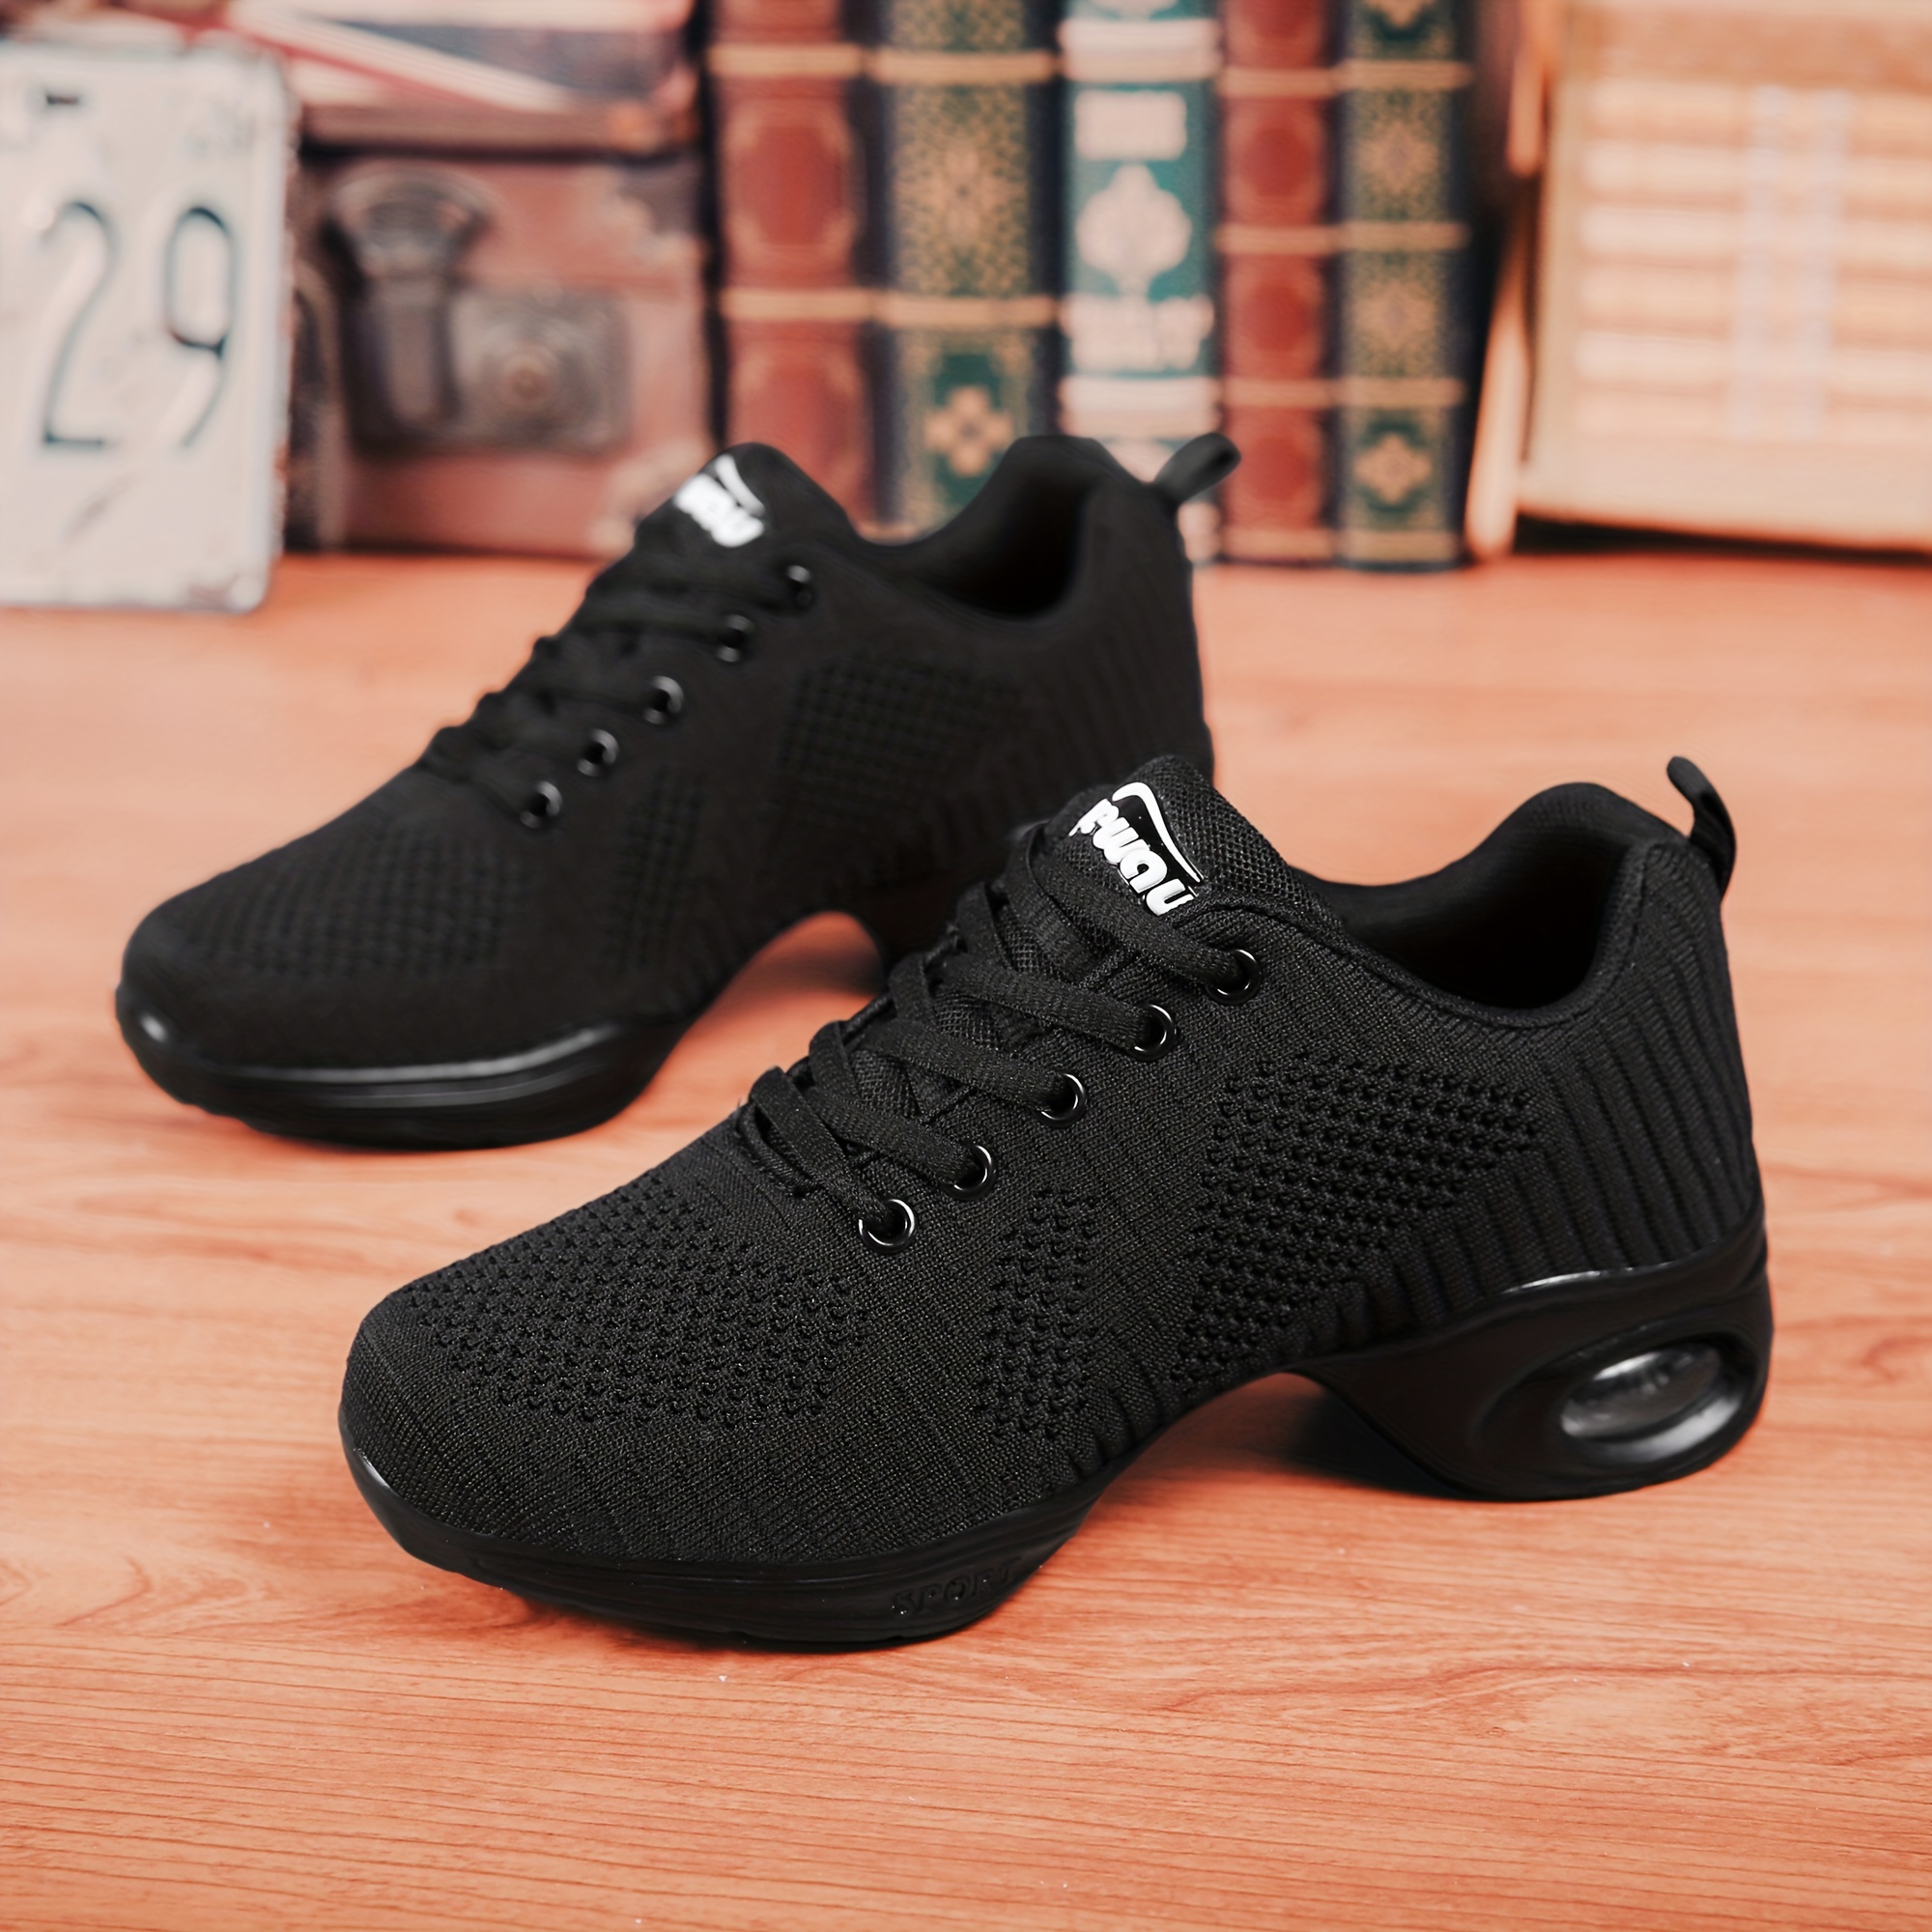  Women's Jazz Shoes Lace-up Sneakers - Breathable Air Cushion  Lady Split Sole Athletic Walking Dance Shoes Platform Black,5